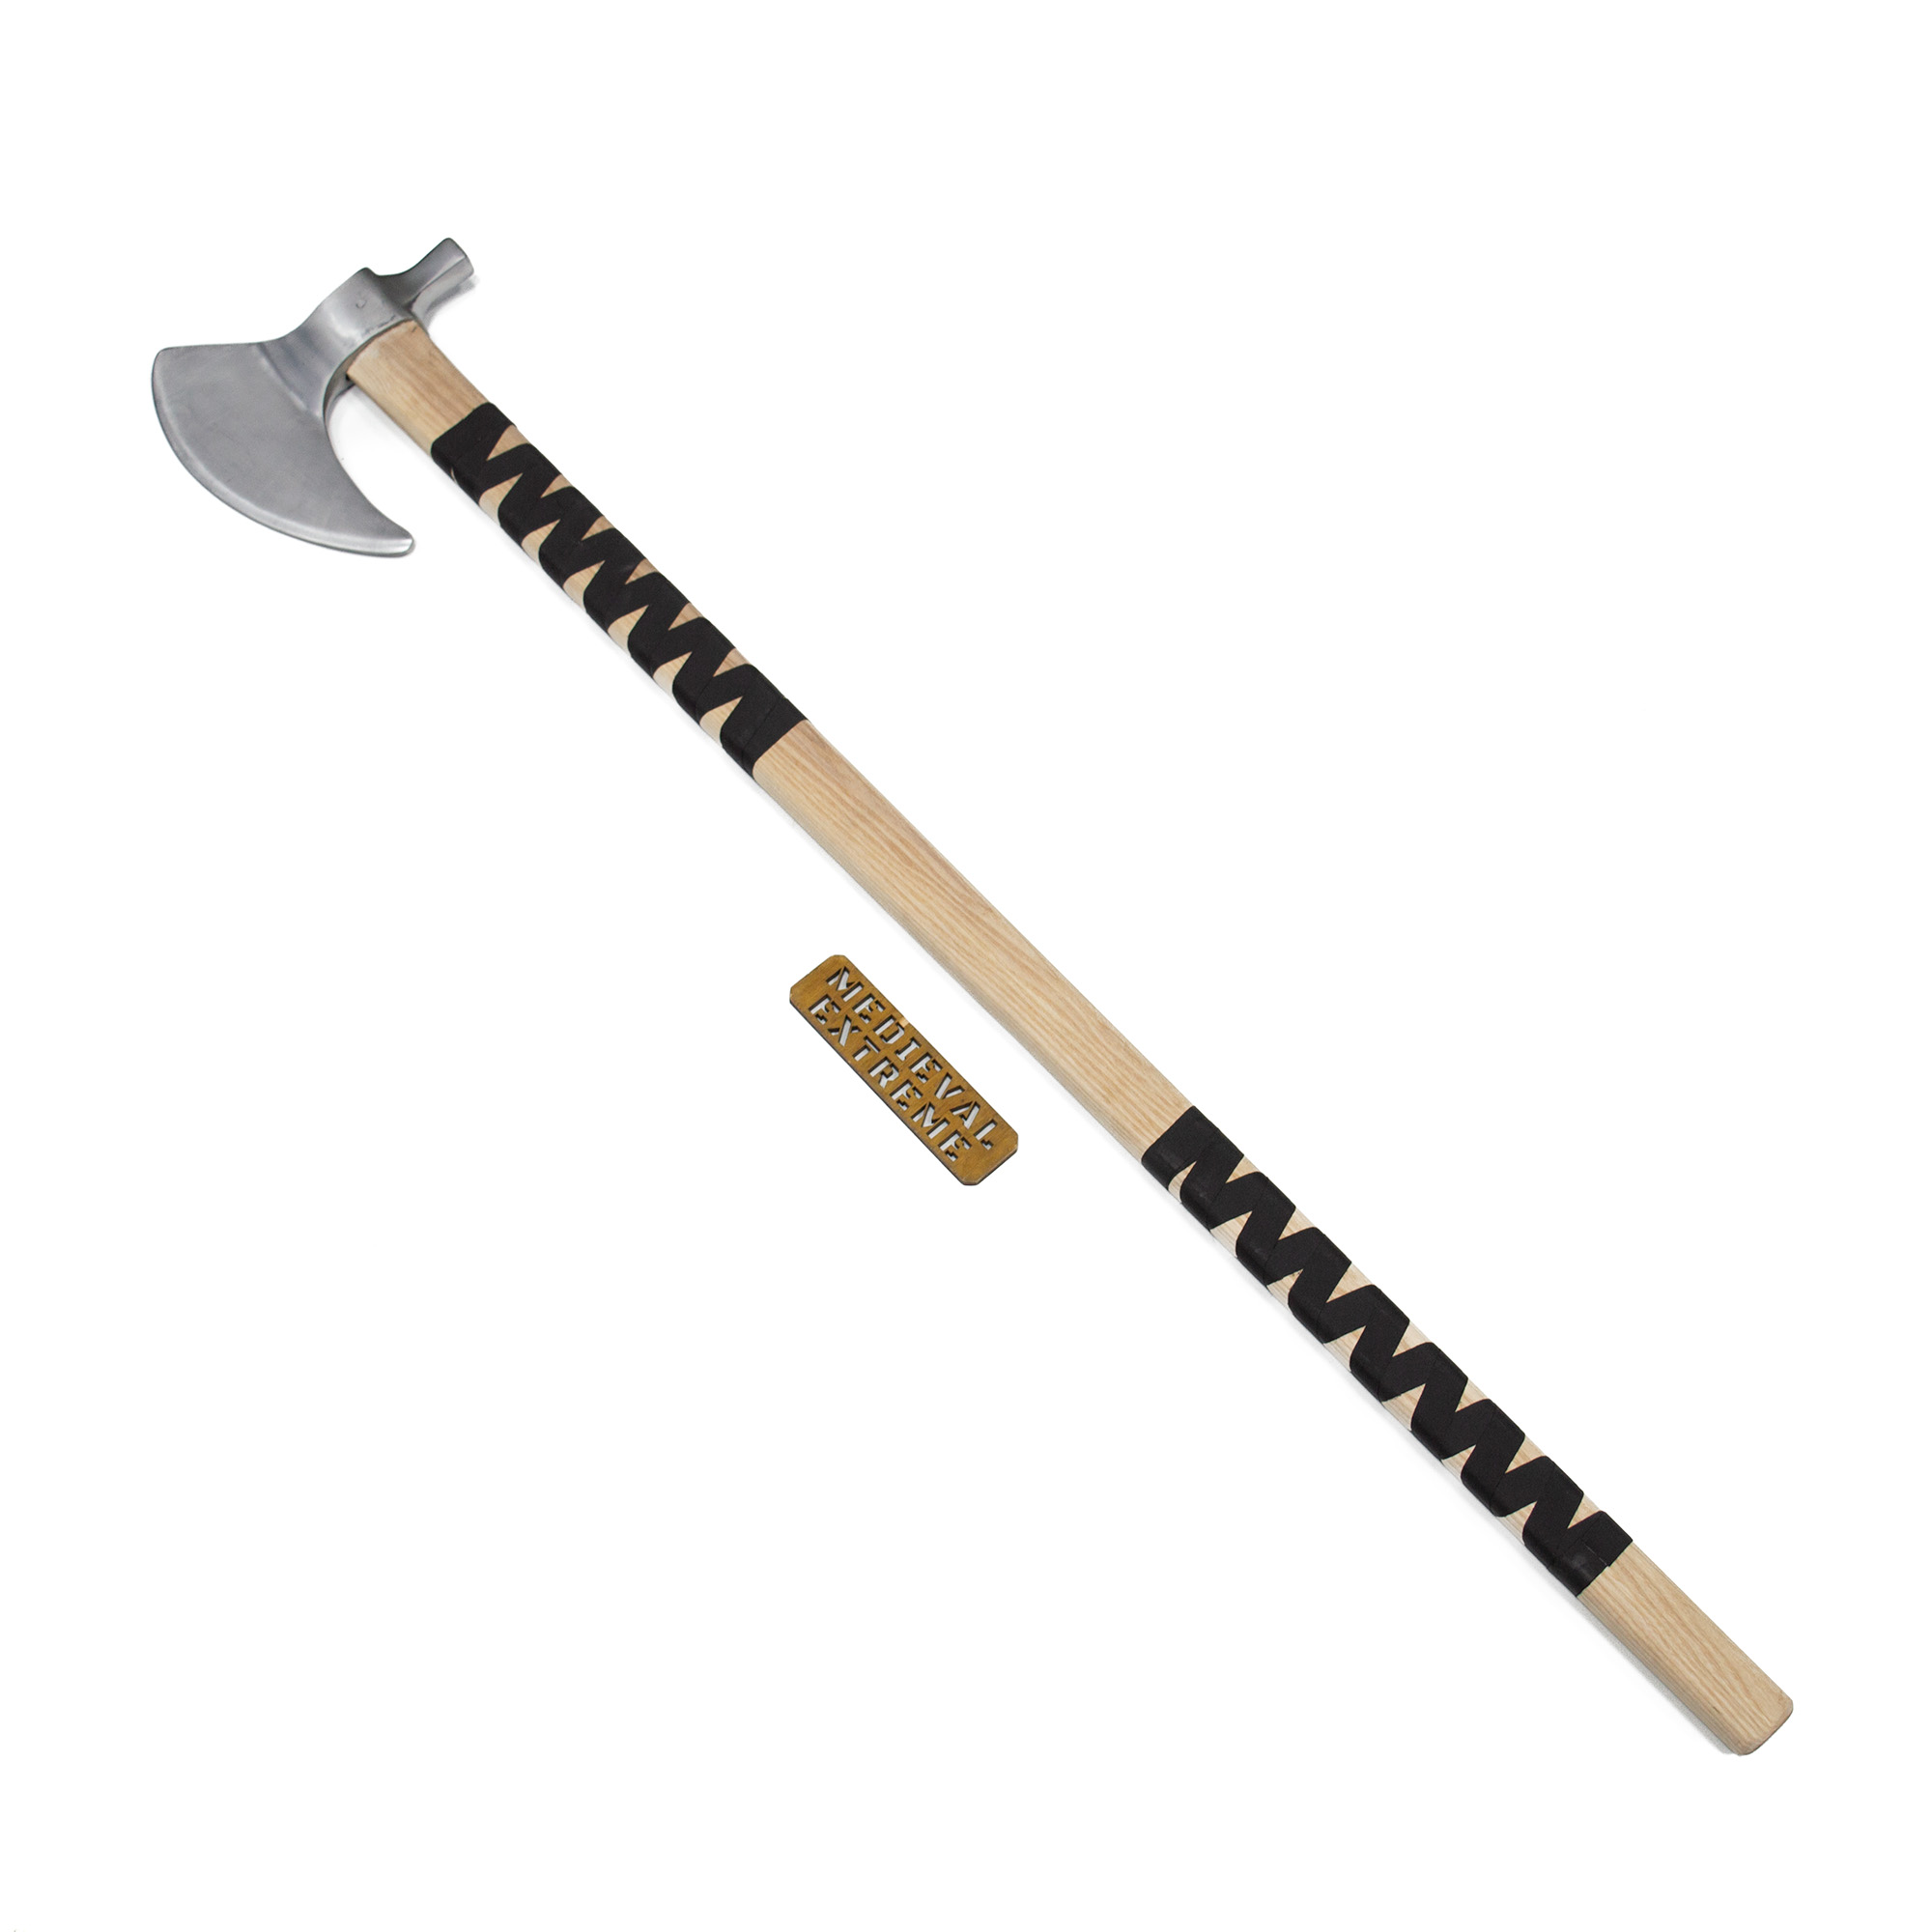 Long axe for with hammerhead full length